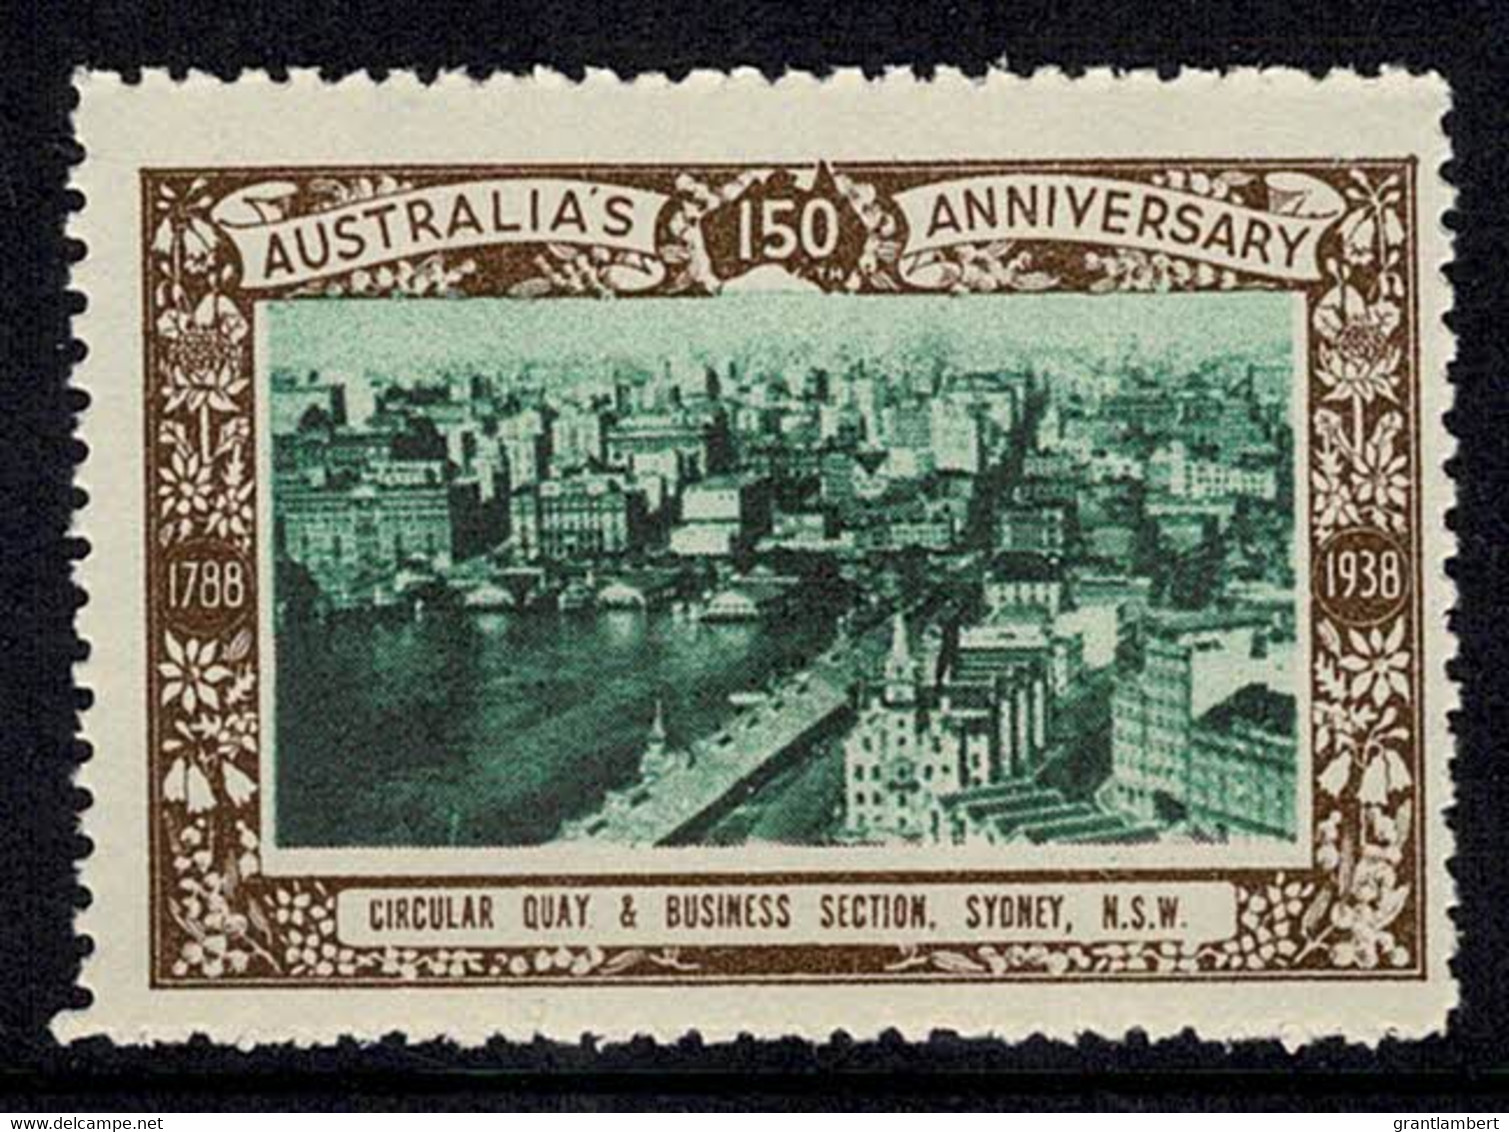 Australia 1938 Circular Quay & Business Section, Sydney - NSW 150th Anniversary Cinderella MNH - Cinderellas